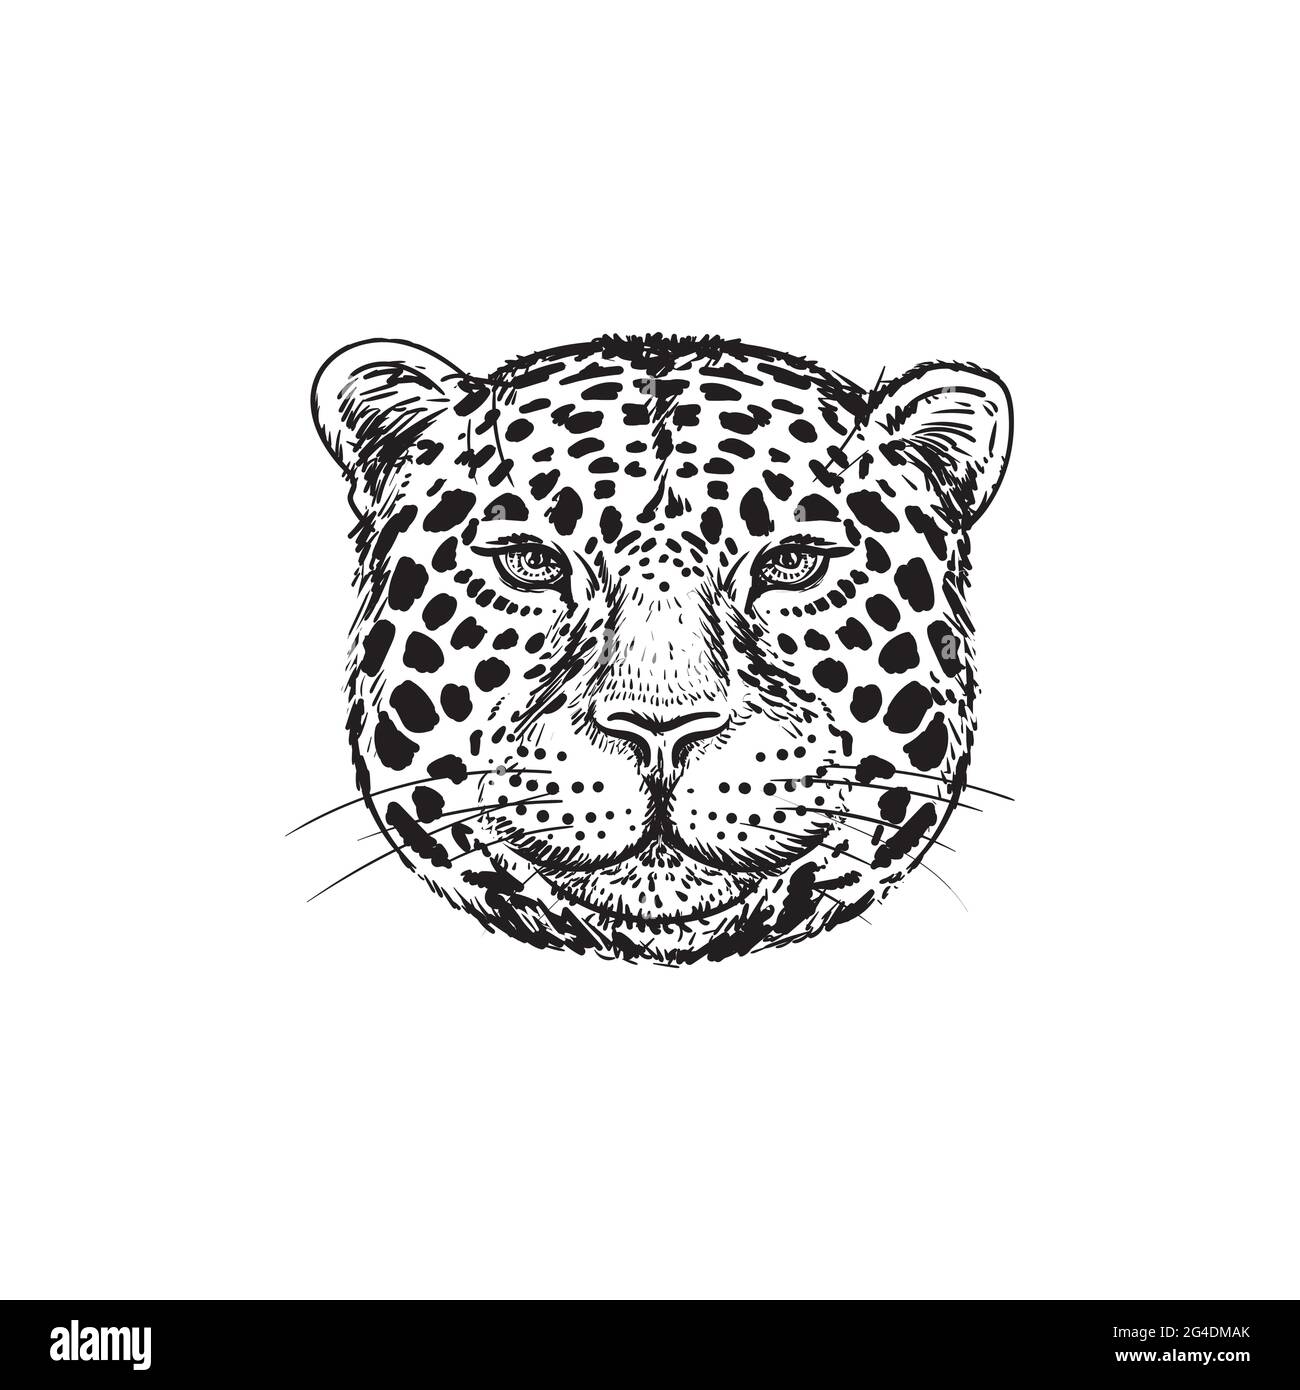 Jaguar Drawing Images  Free Download on Freepik